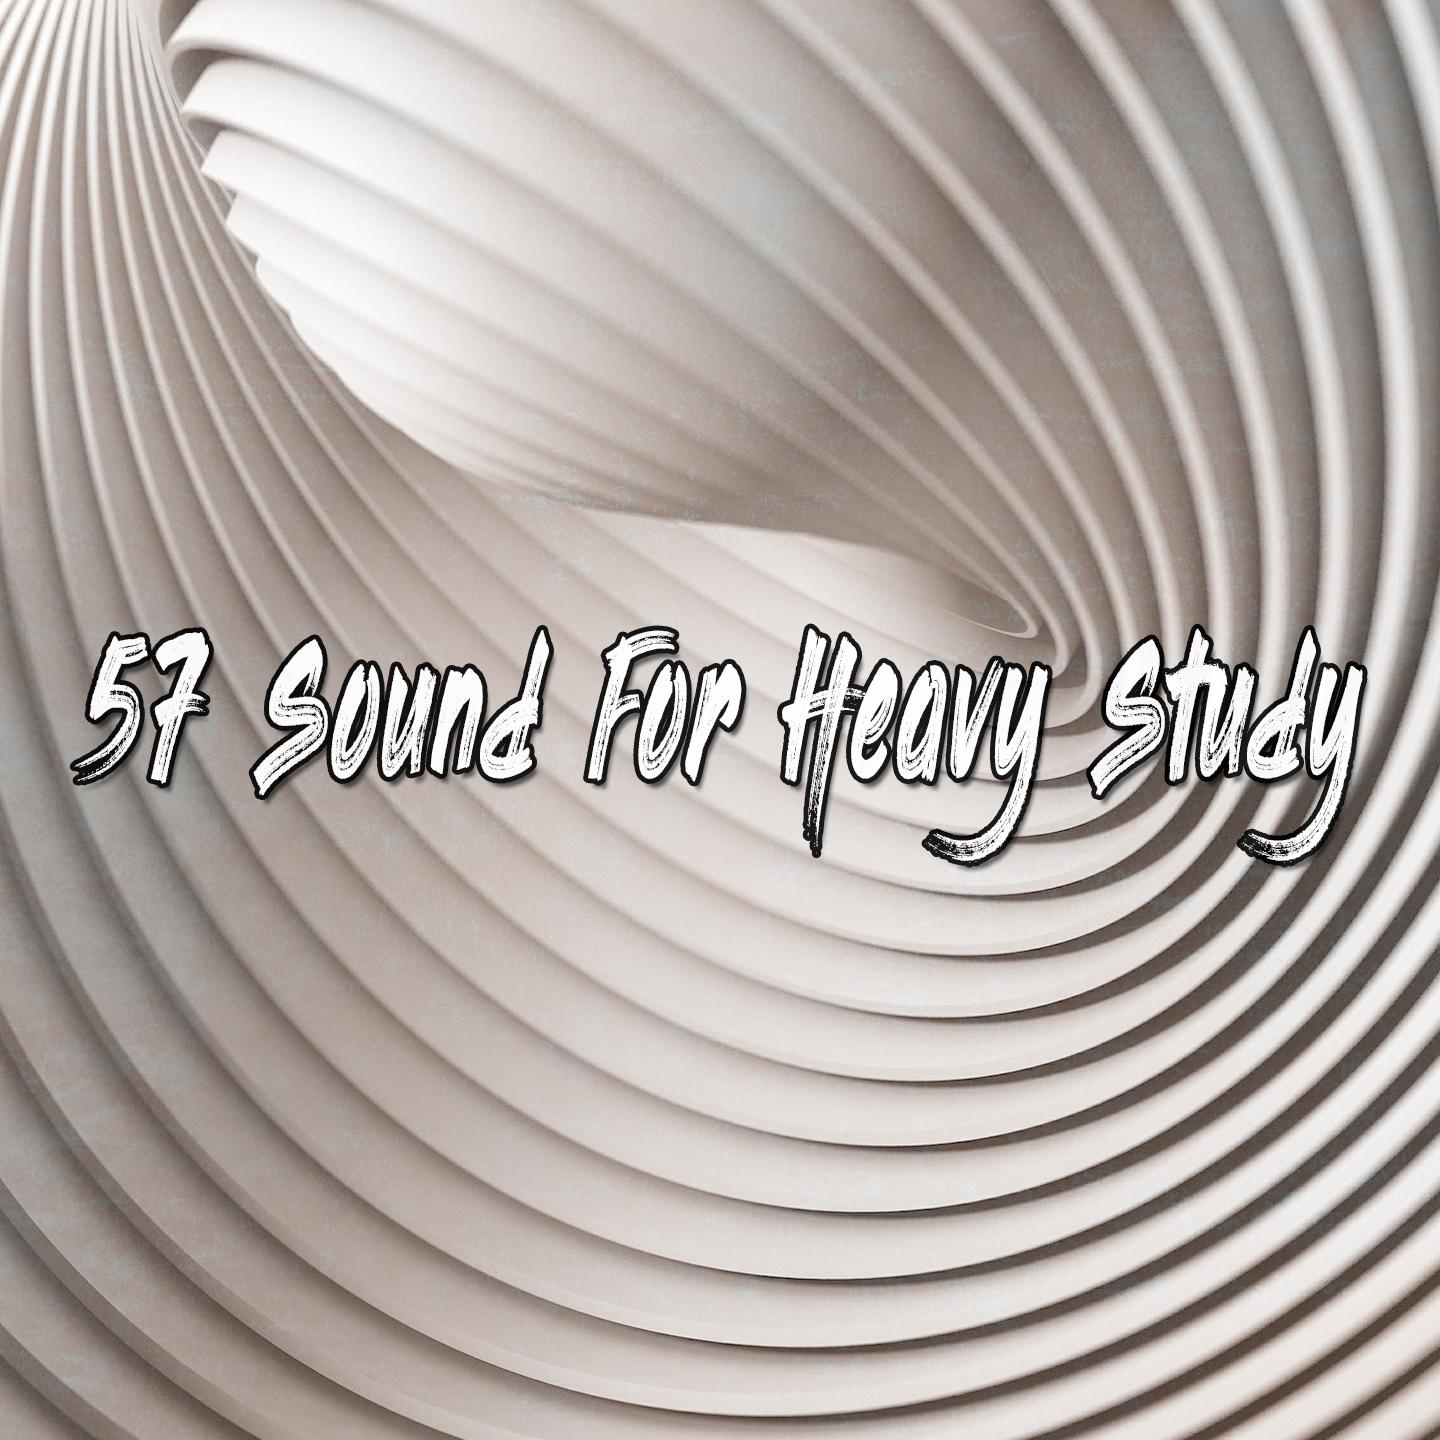 57 Sound For Heavy Study